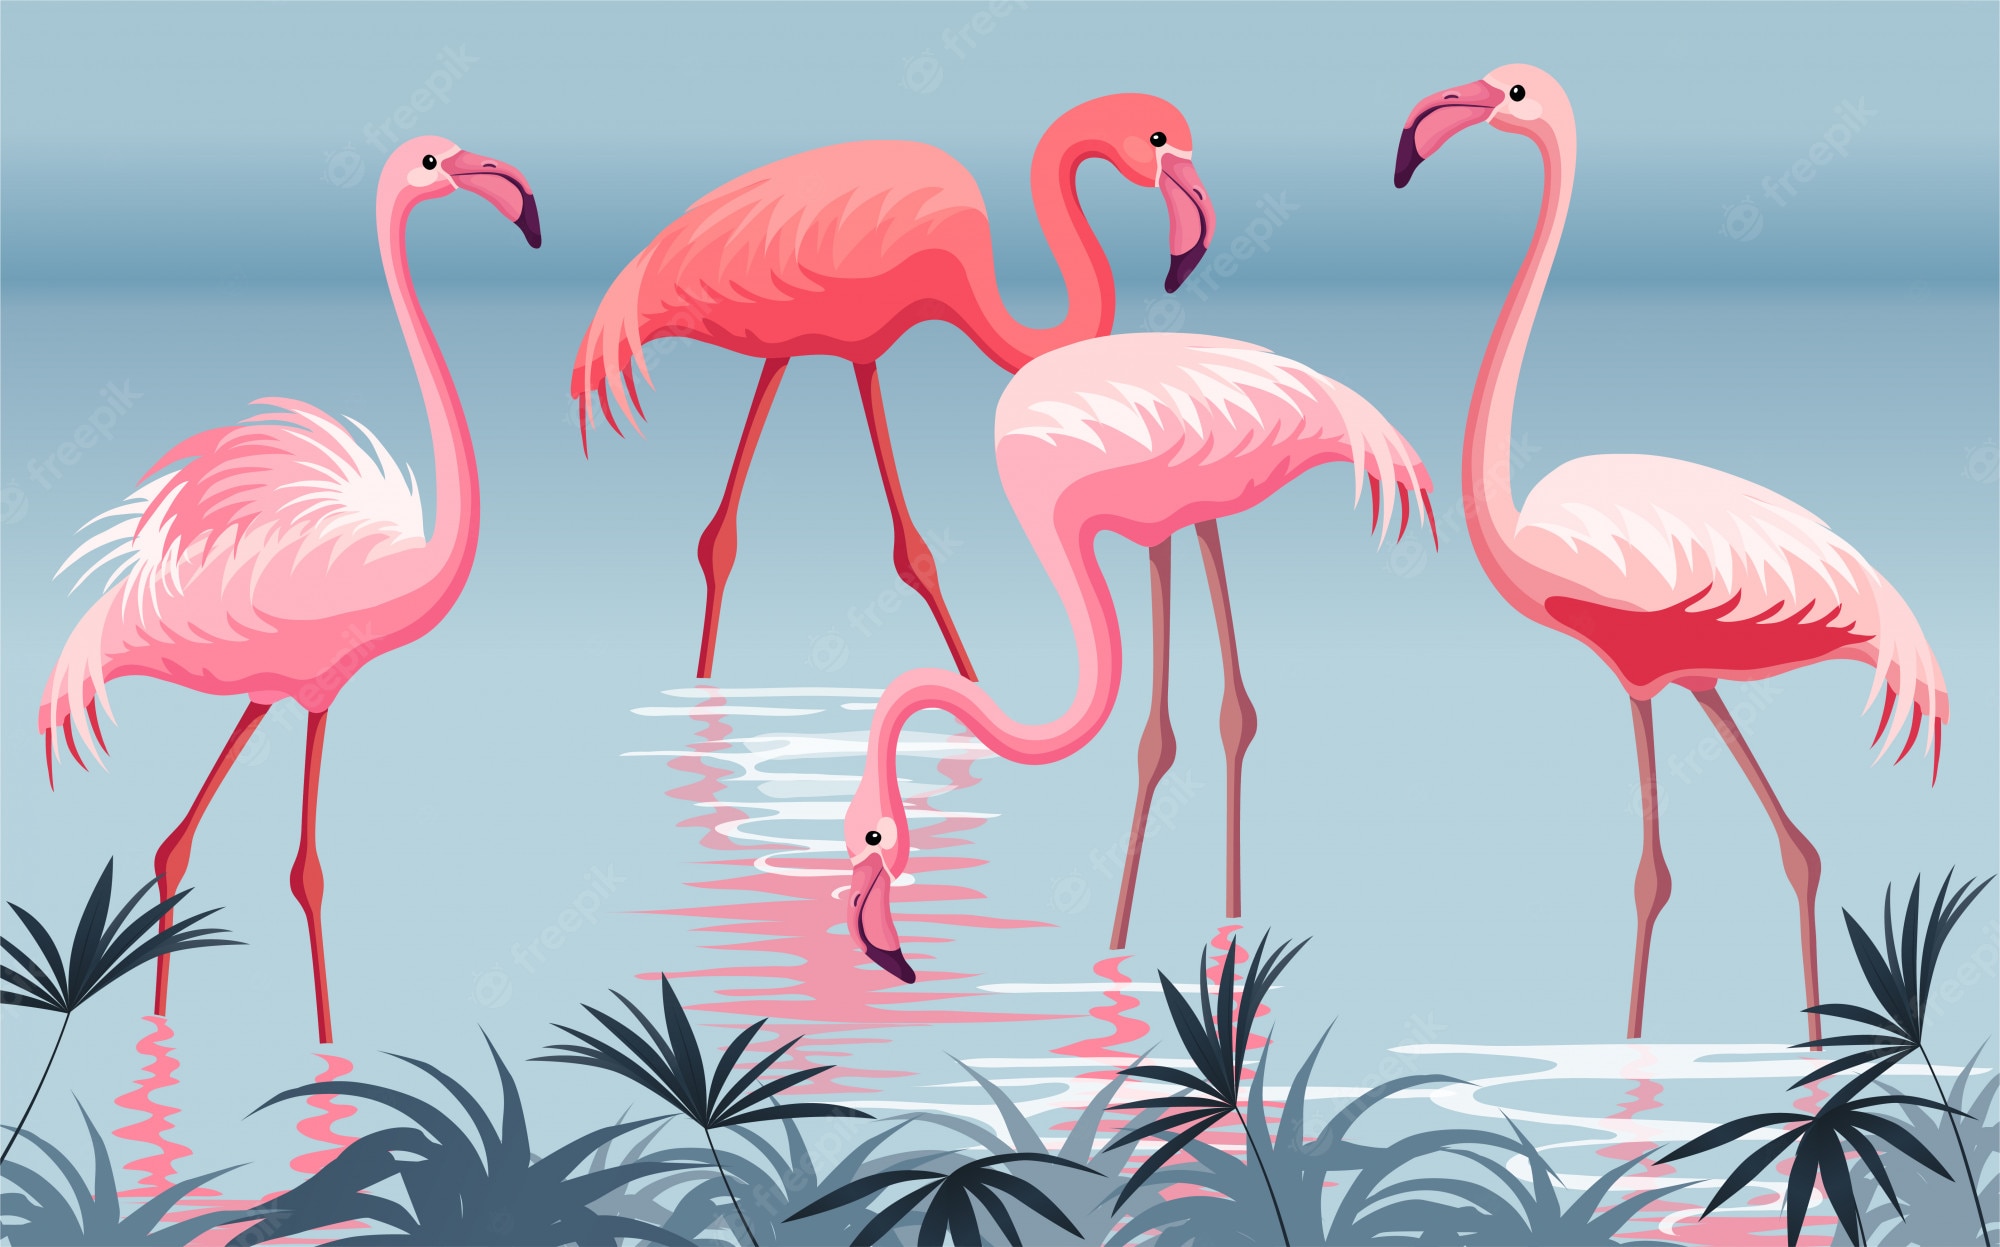 Flamingo Image. Free Vectors, & PSD